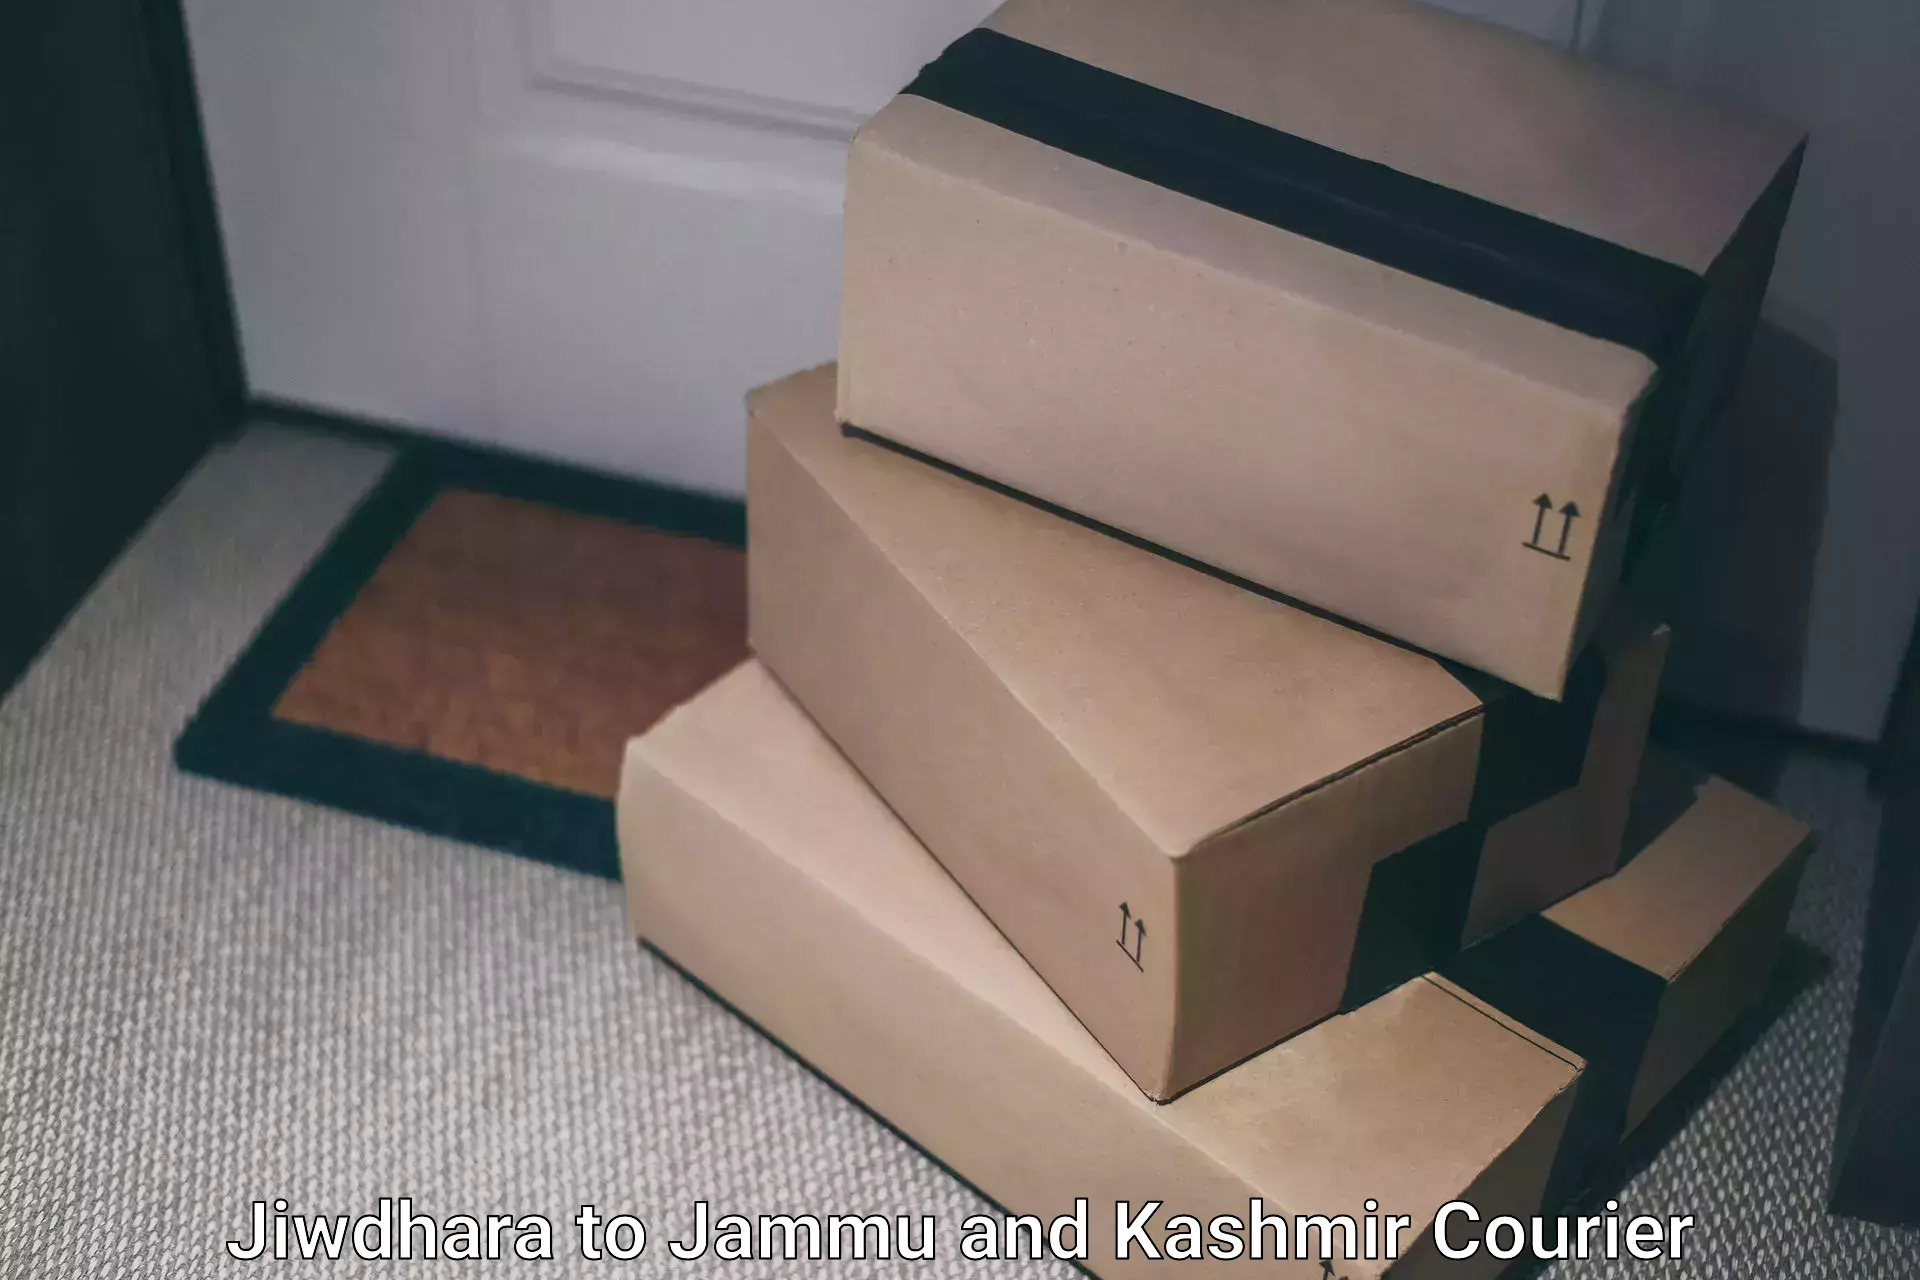 Reliable delivery network Jiwdhara to Jammu